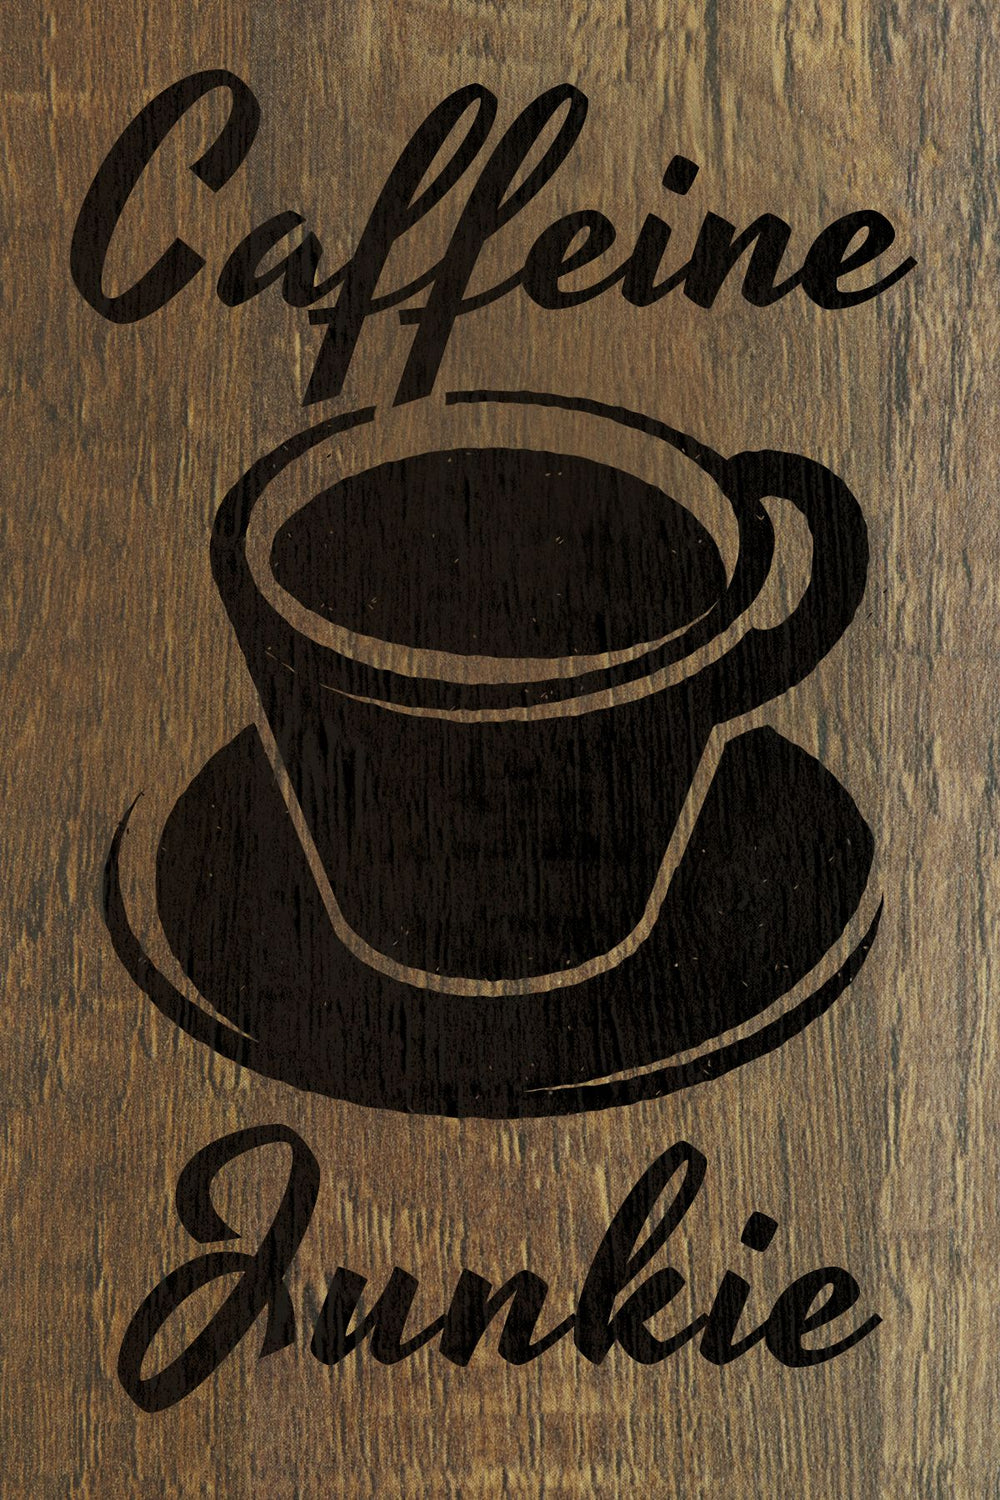 Caffeine Junkie Typography